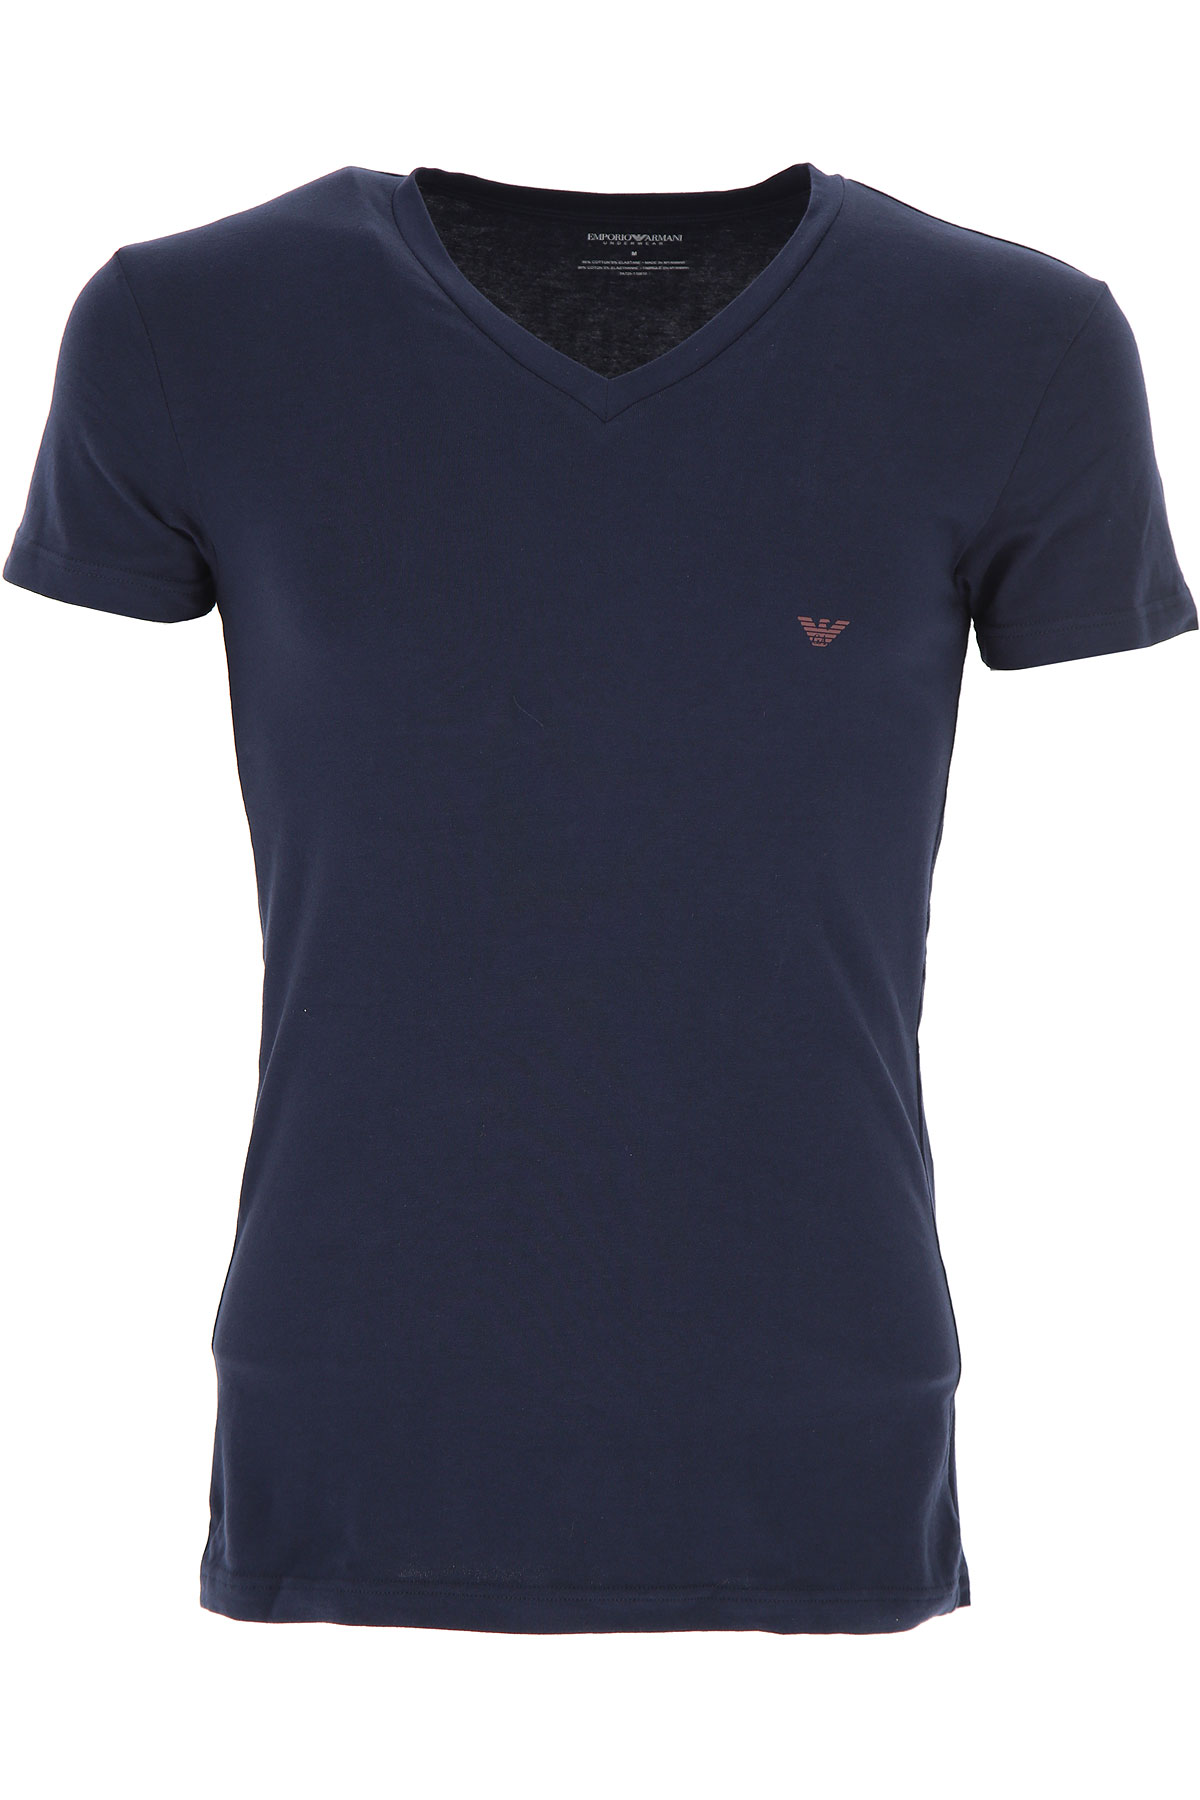 Emporio Armani T-shirt Homme , Bleu marine, Coton, 2017, S XL